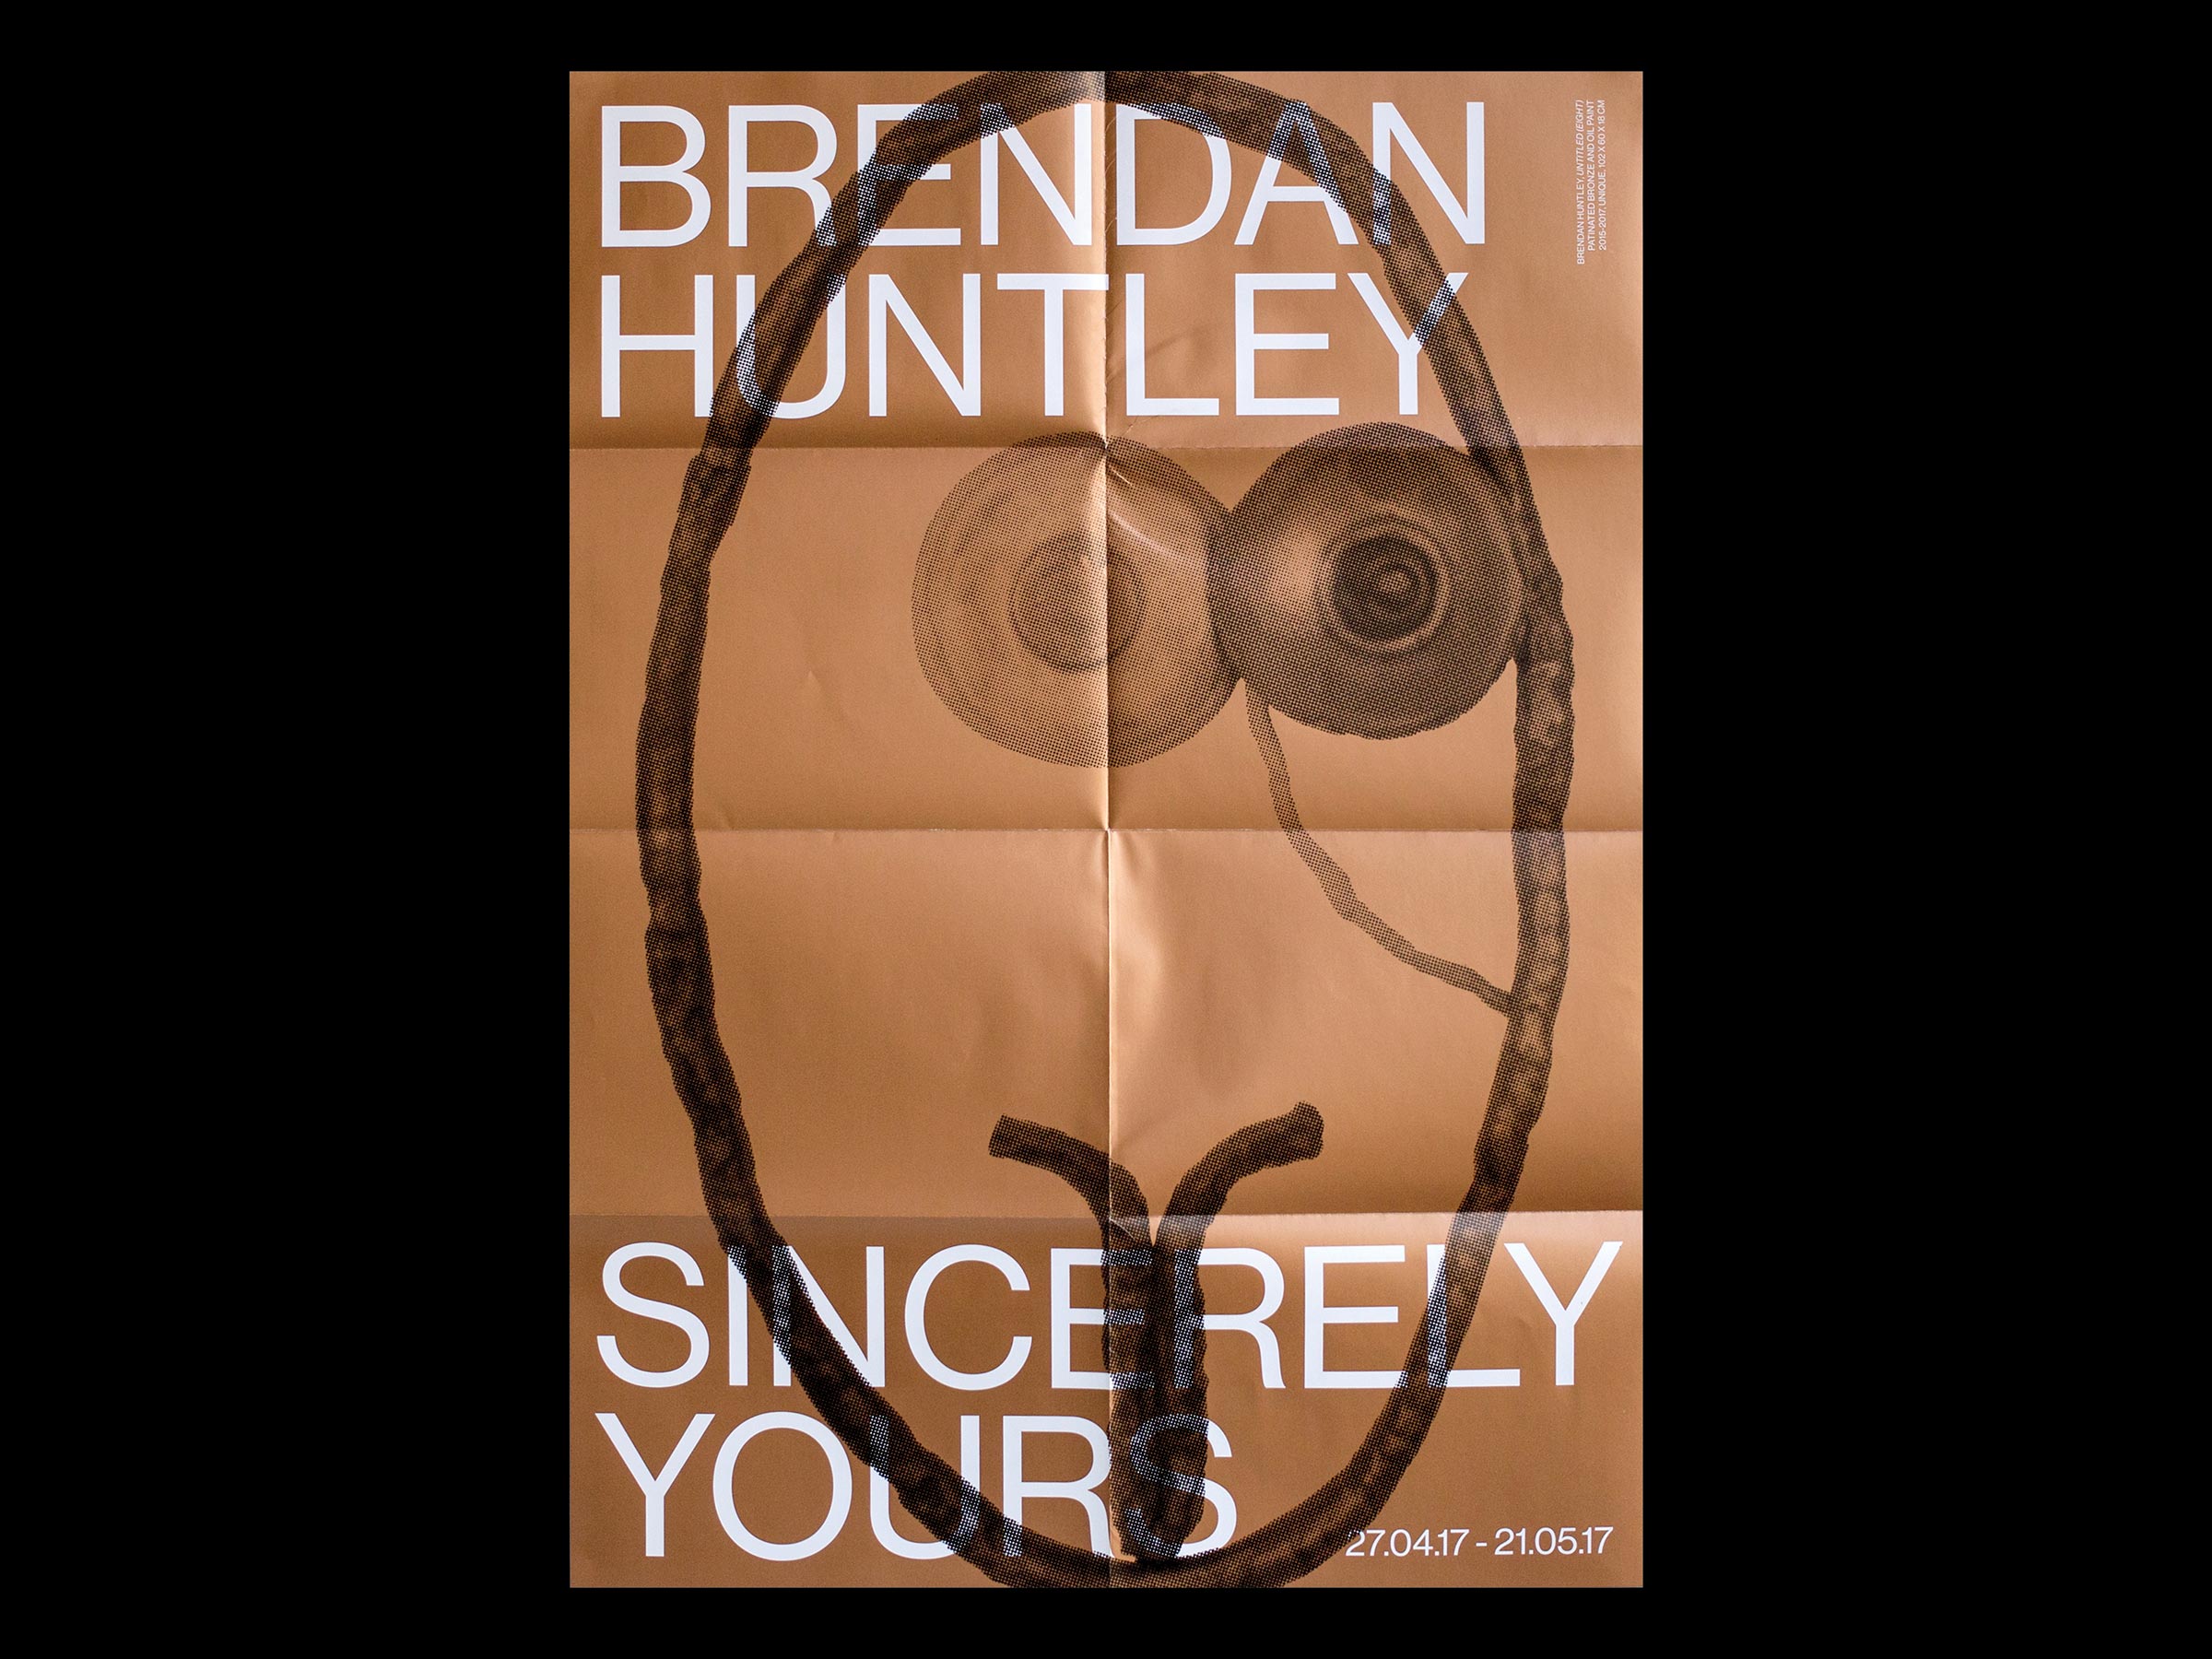 Brendan Huntley, Sincerely Yours